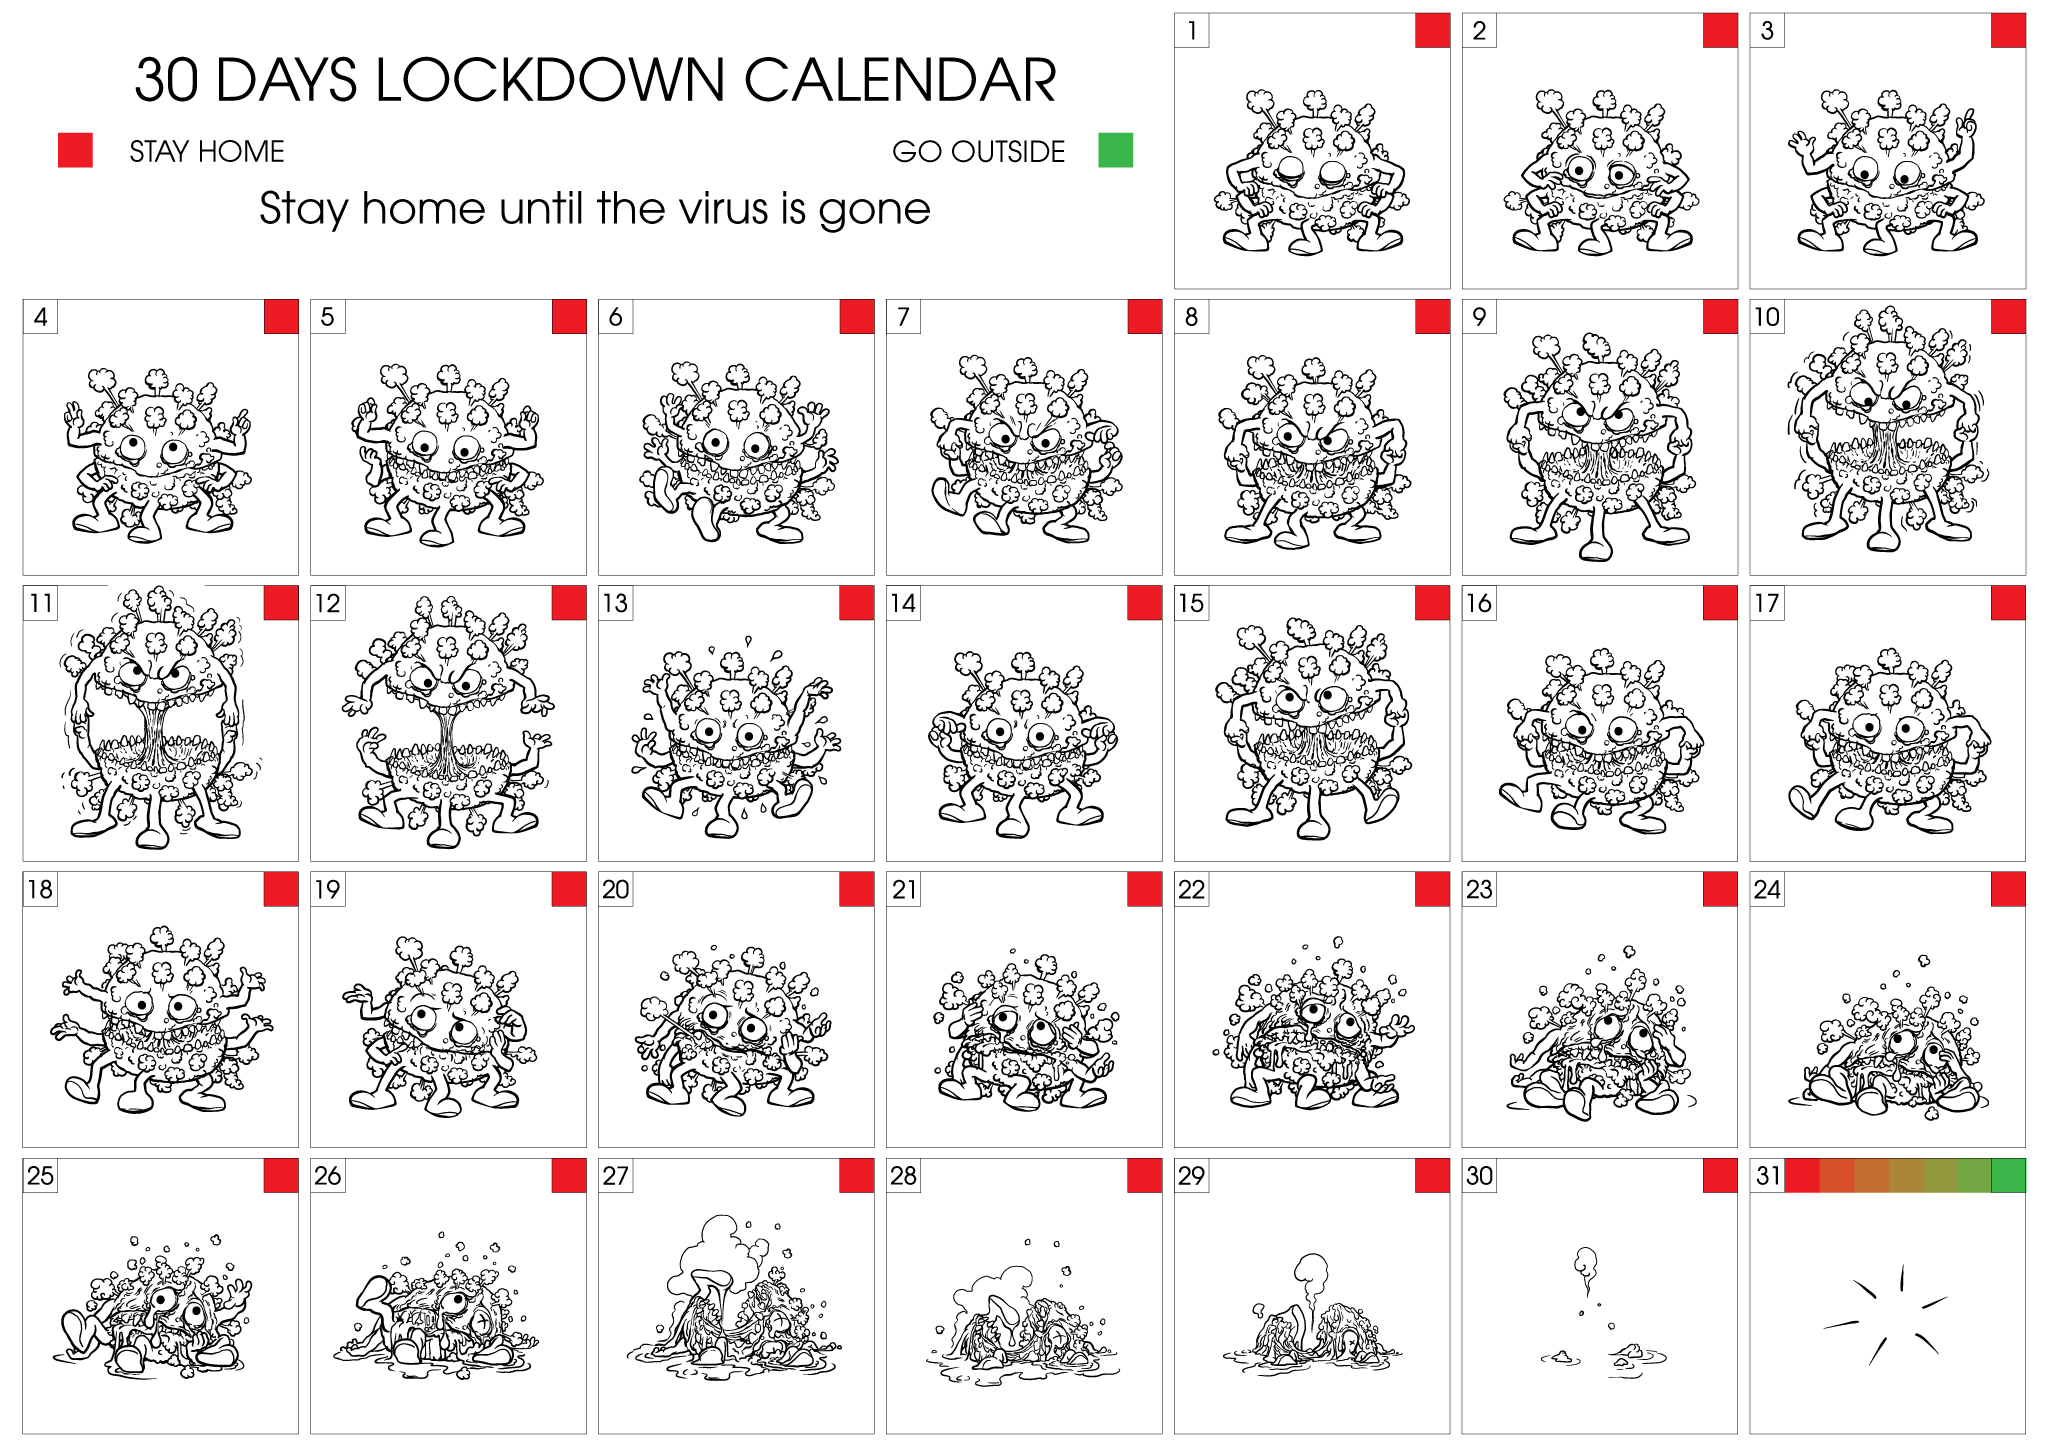 30 days lockdown calendar